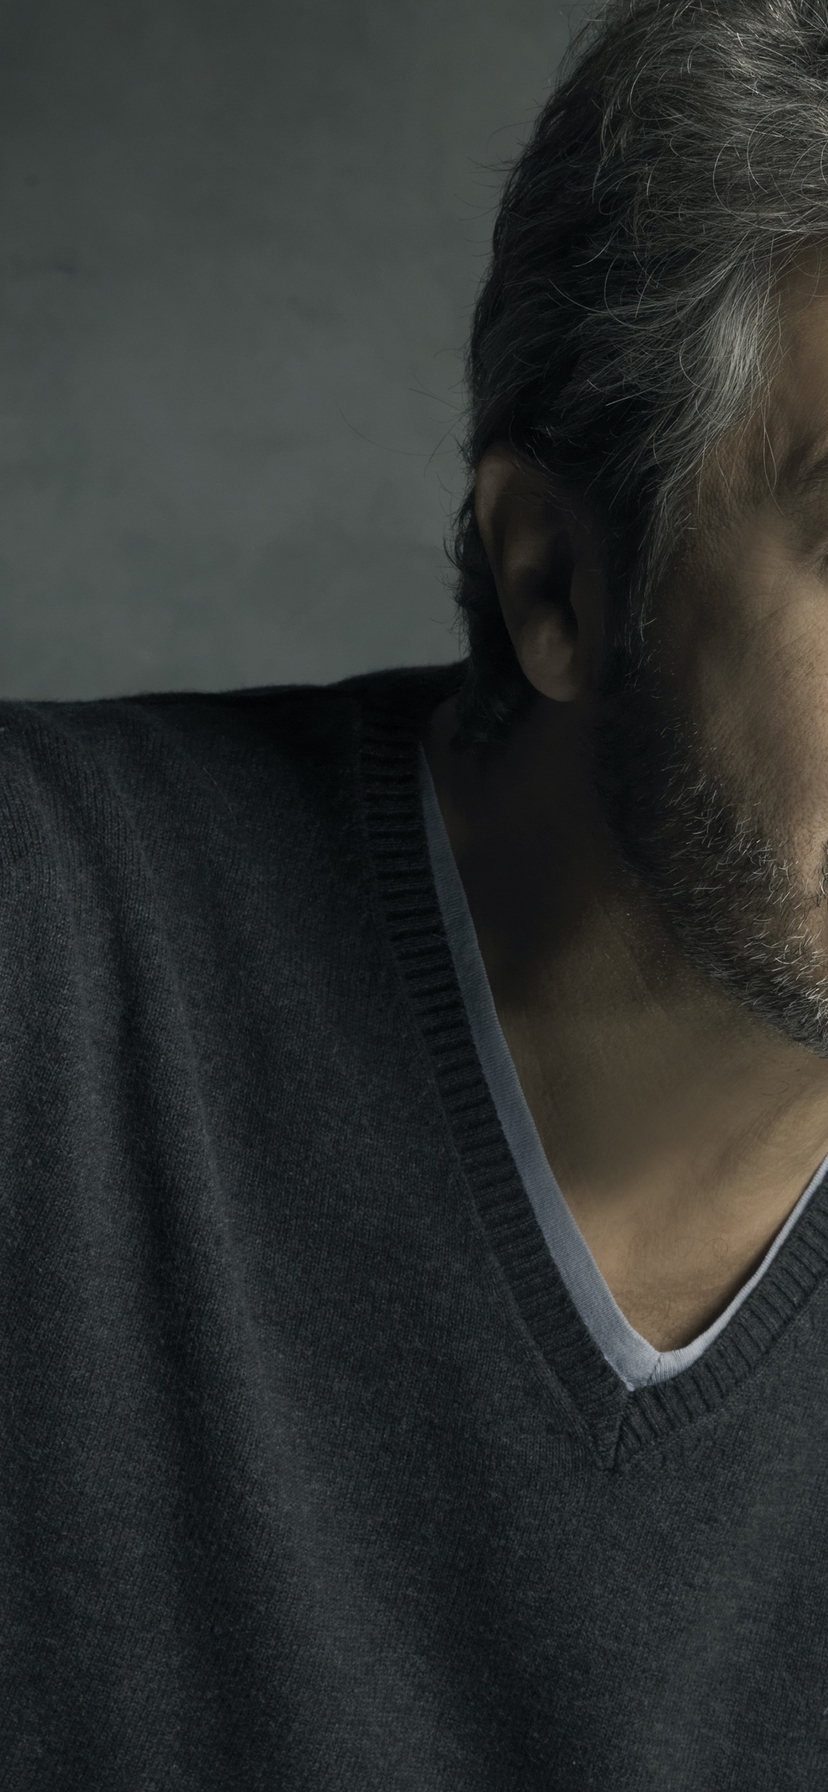 Image: Ricardo Darin, Argentina, actor, male, gray